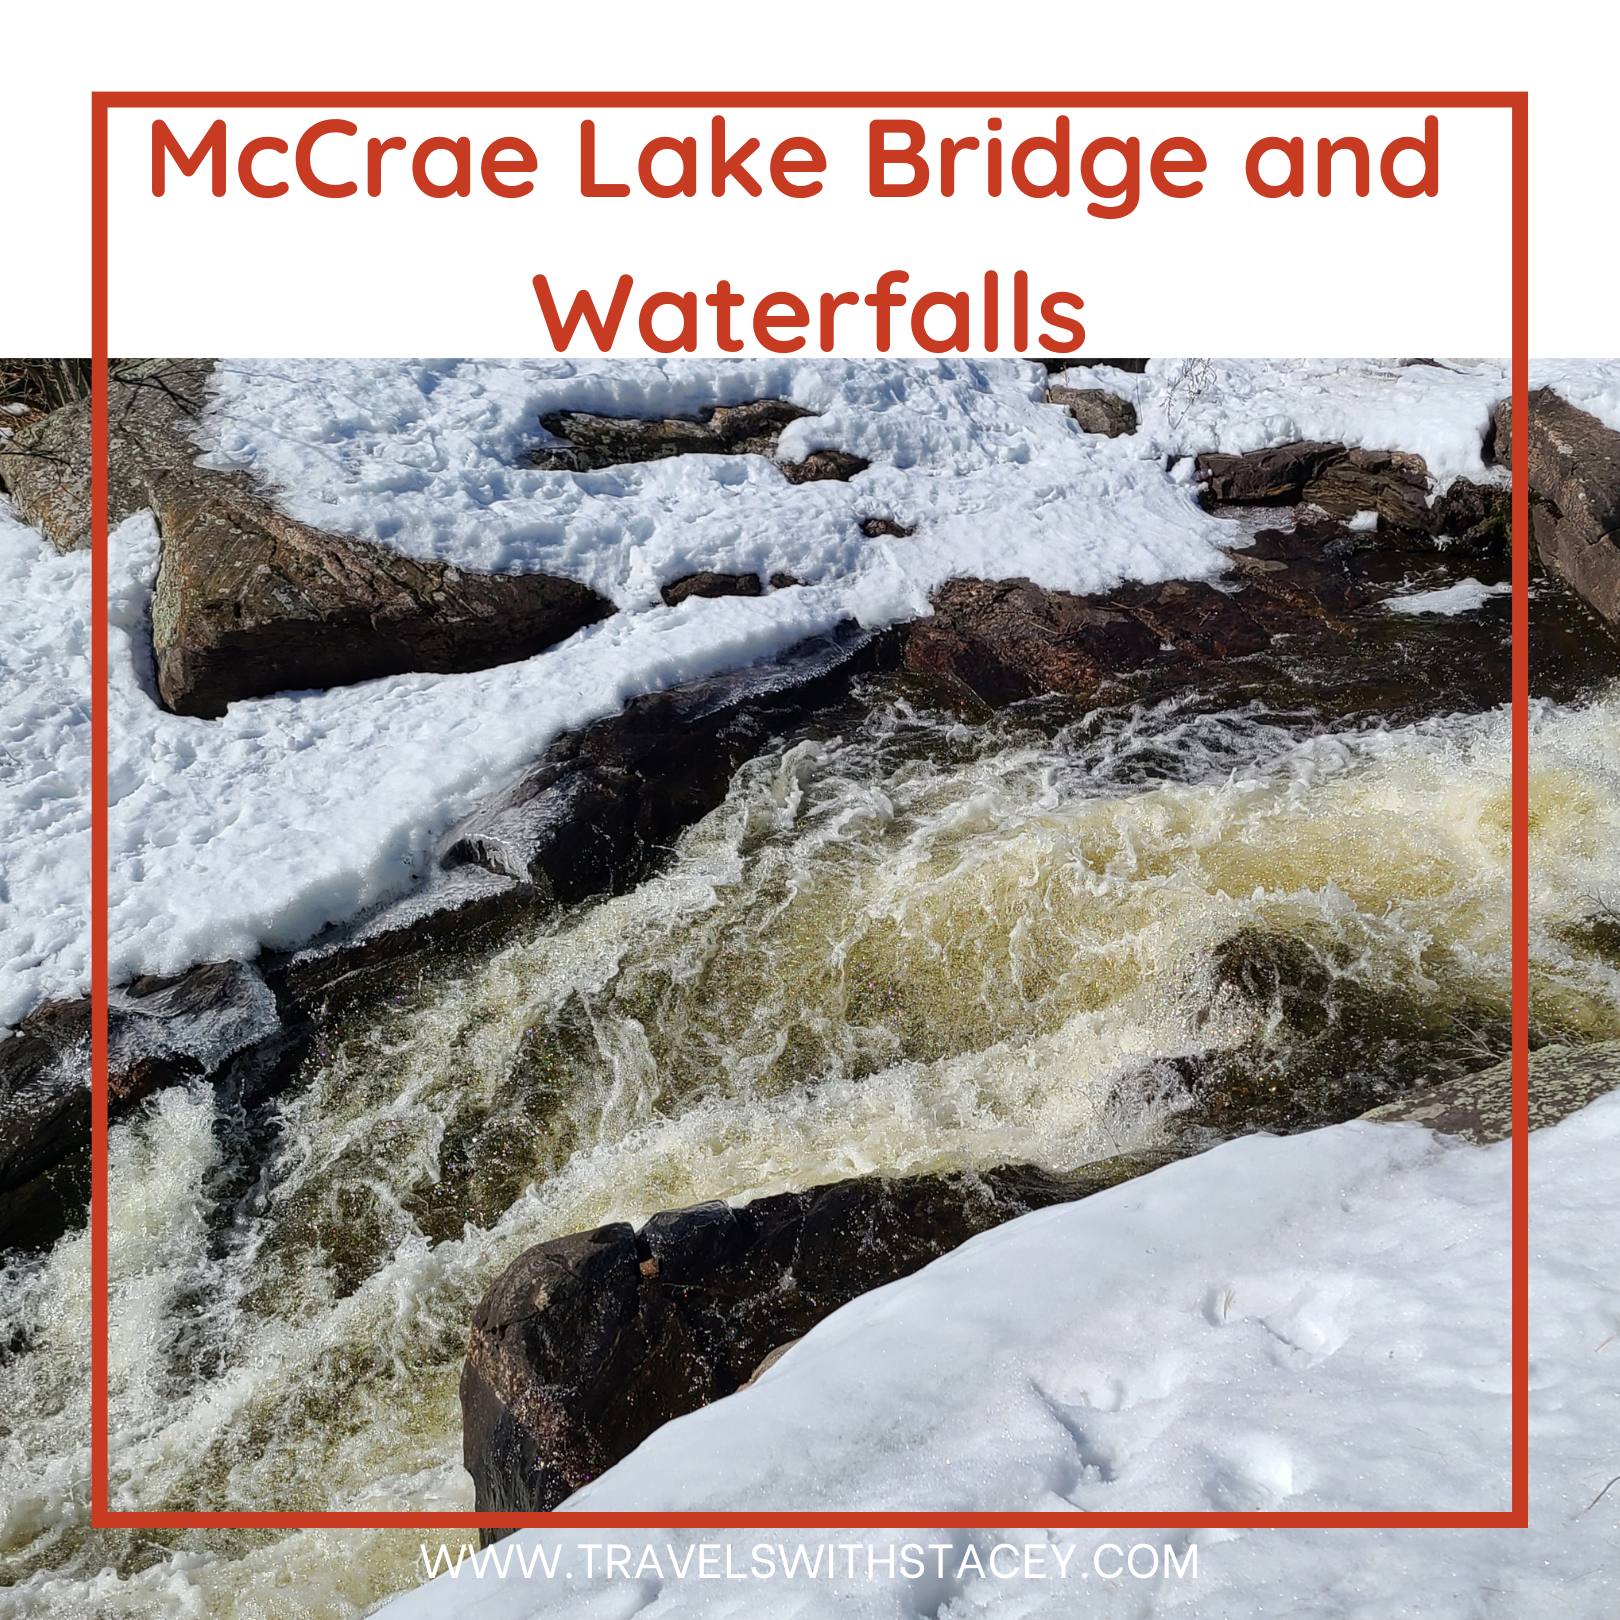 McCrae Lake Bridge and Waterfall